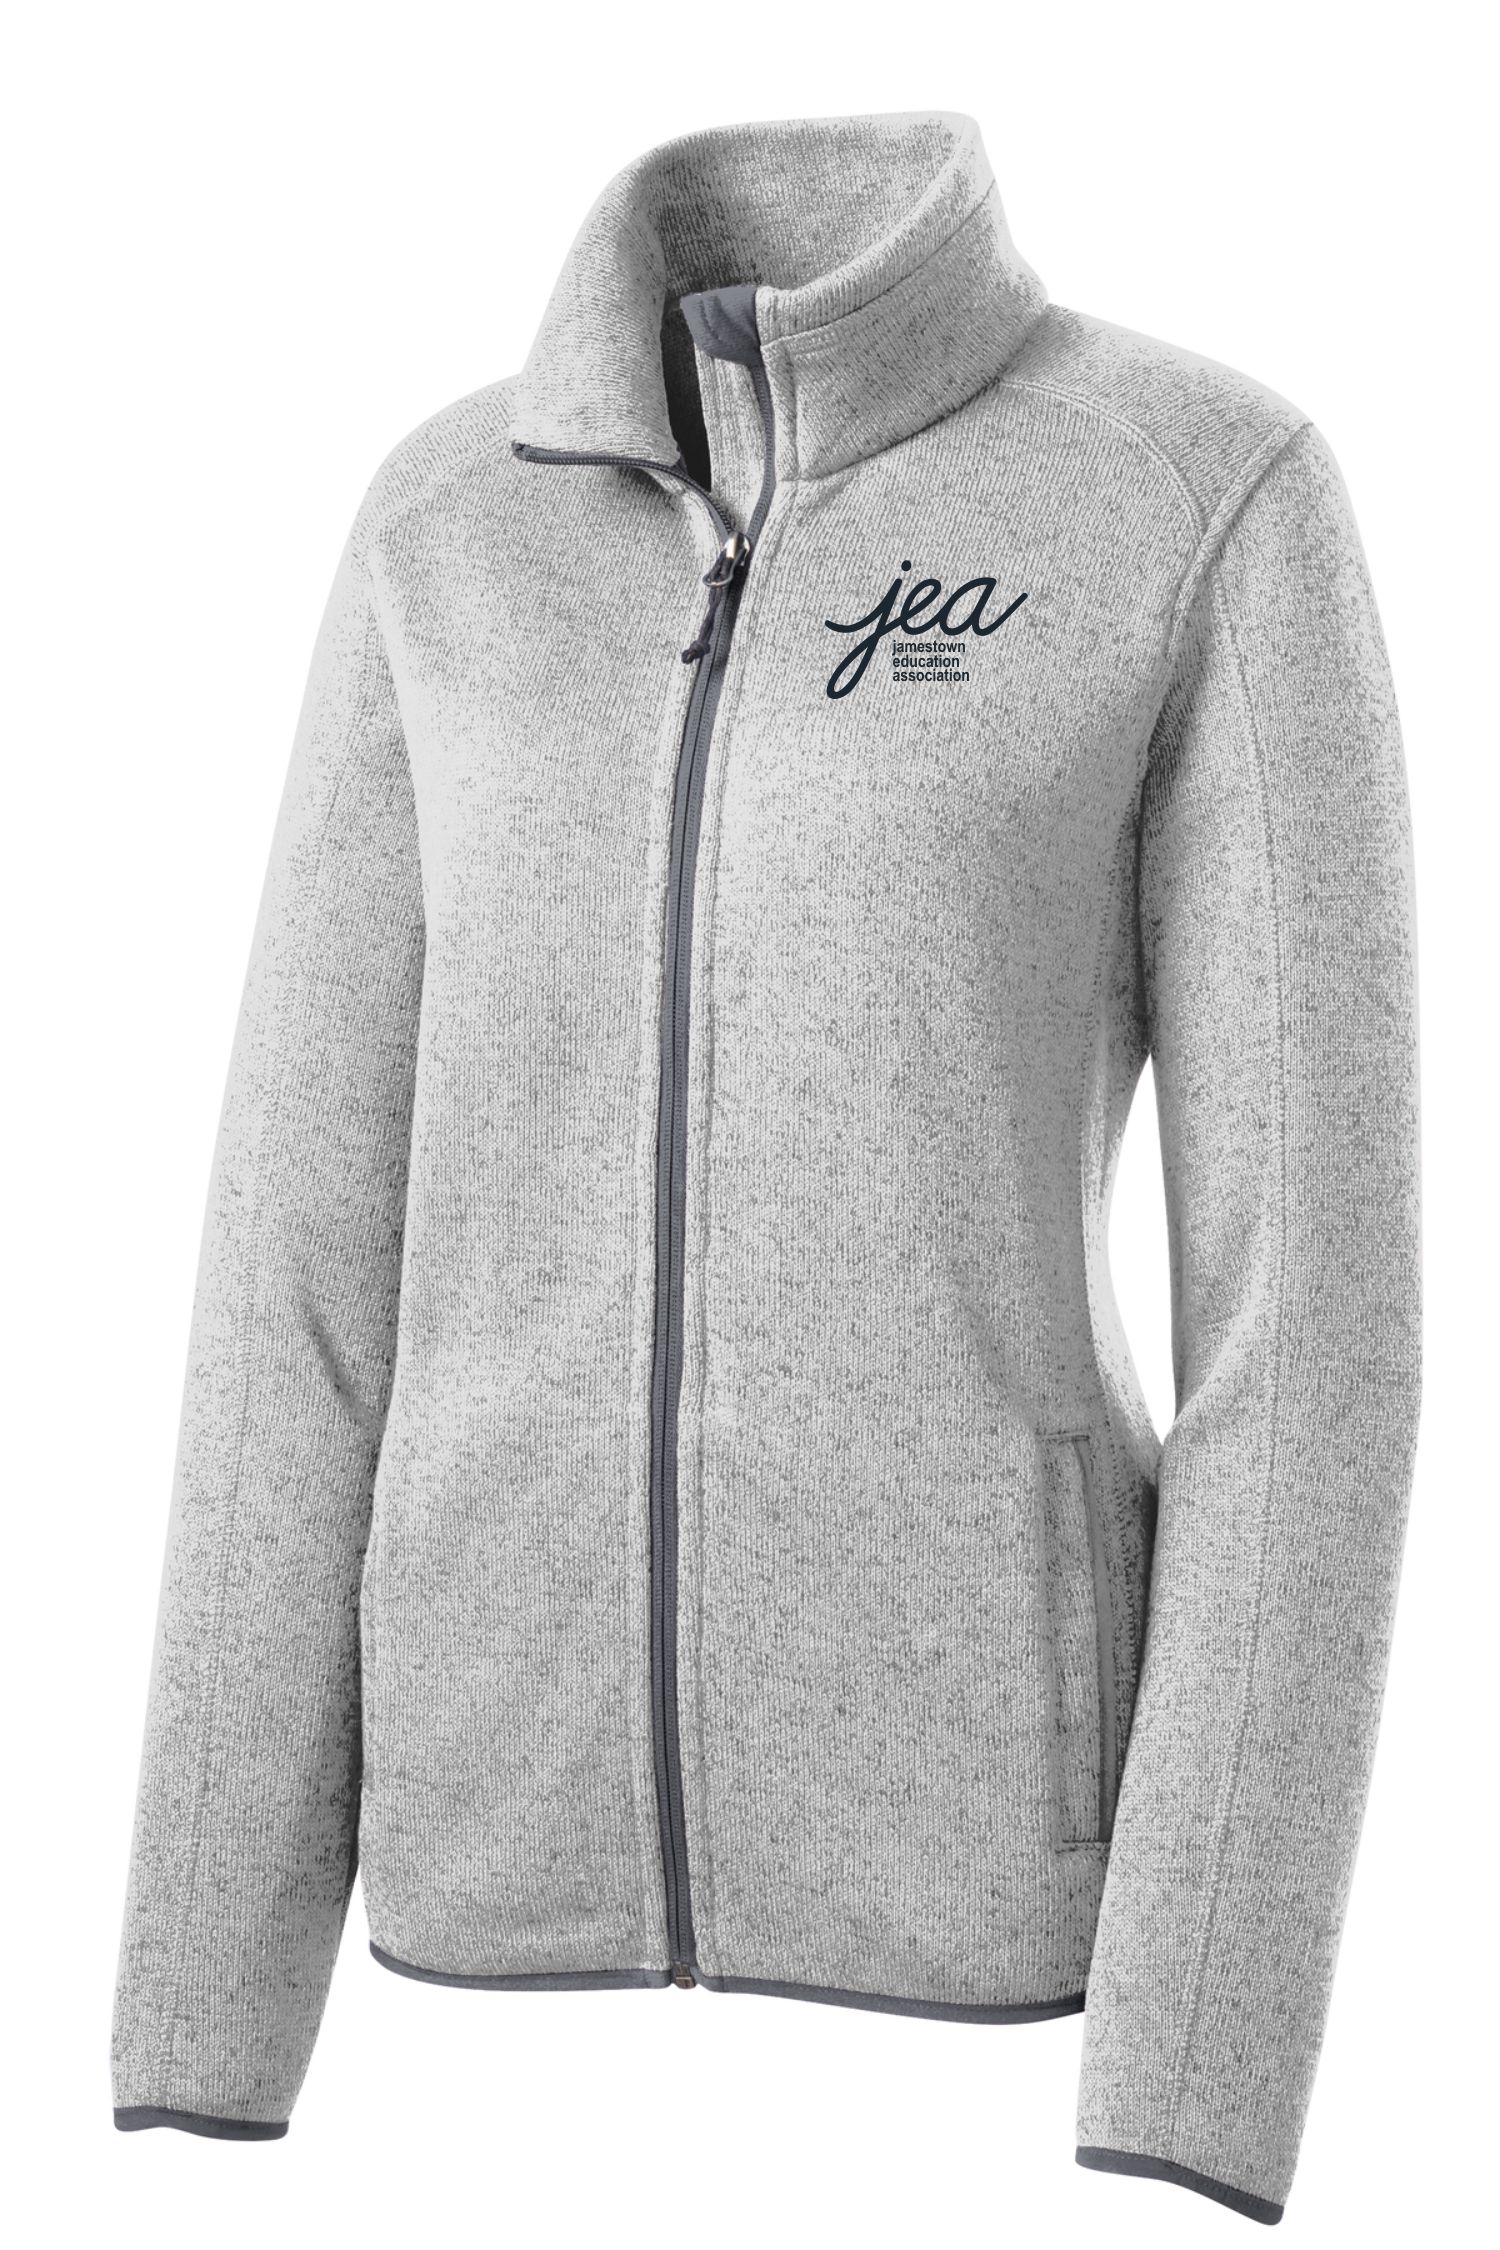 JEA L232 Ladies Unisex Port Authority Sweater Fleece Jacket (Grey Heather)